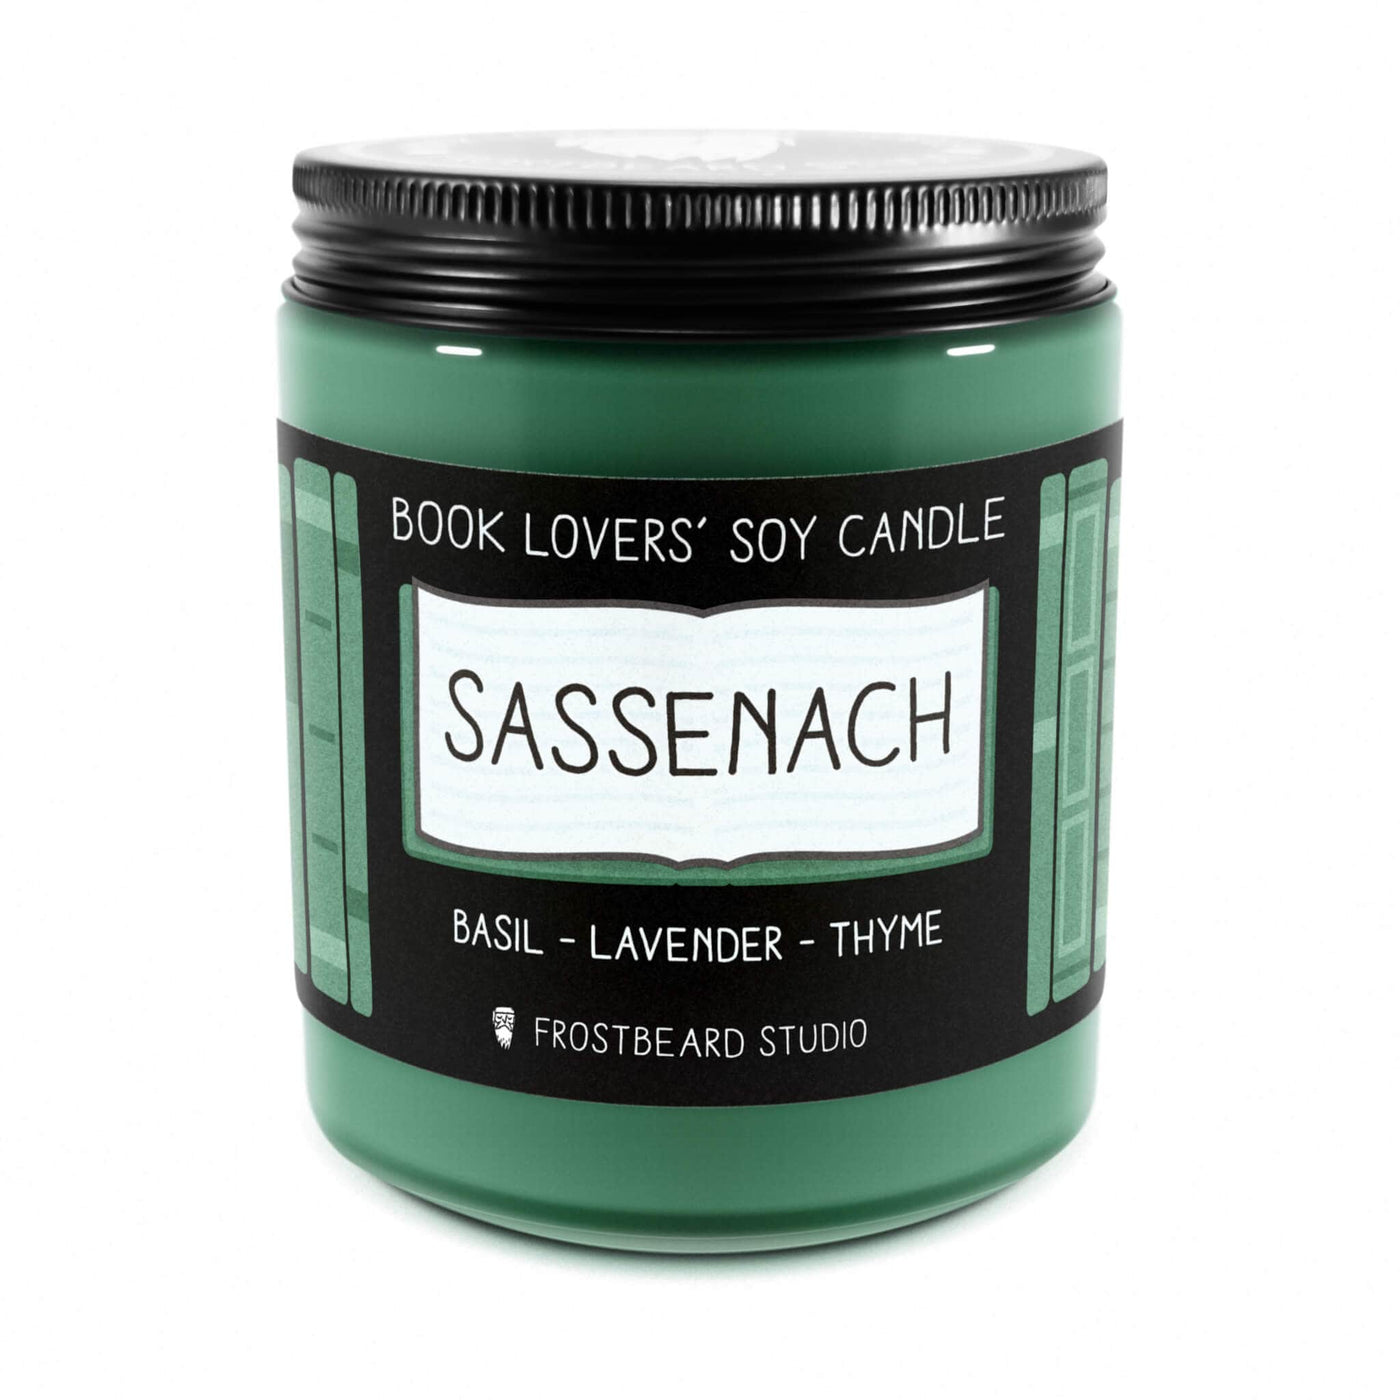 Sassenach - 8 oz Jar - Book Lovers' Soy Candle - Frostbeard Studio